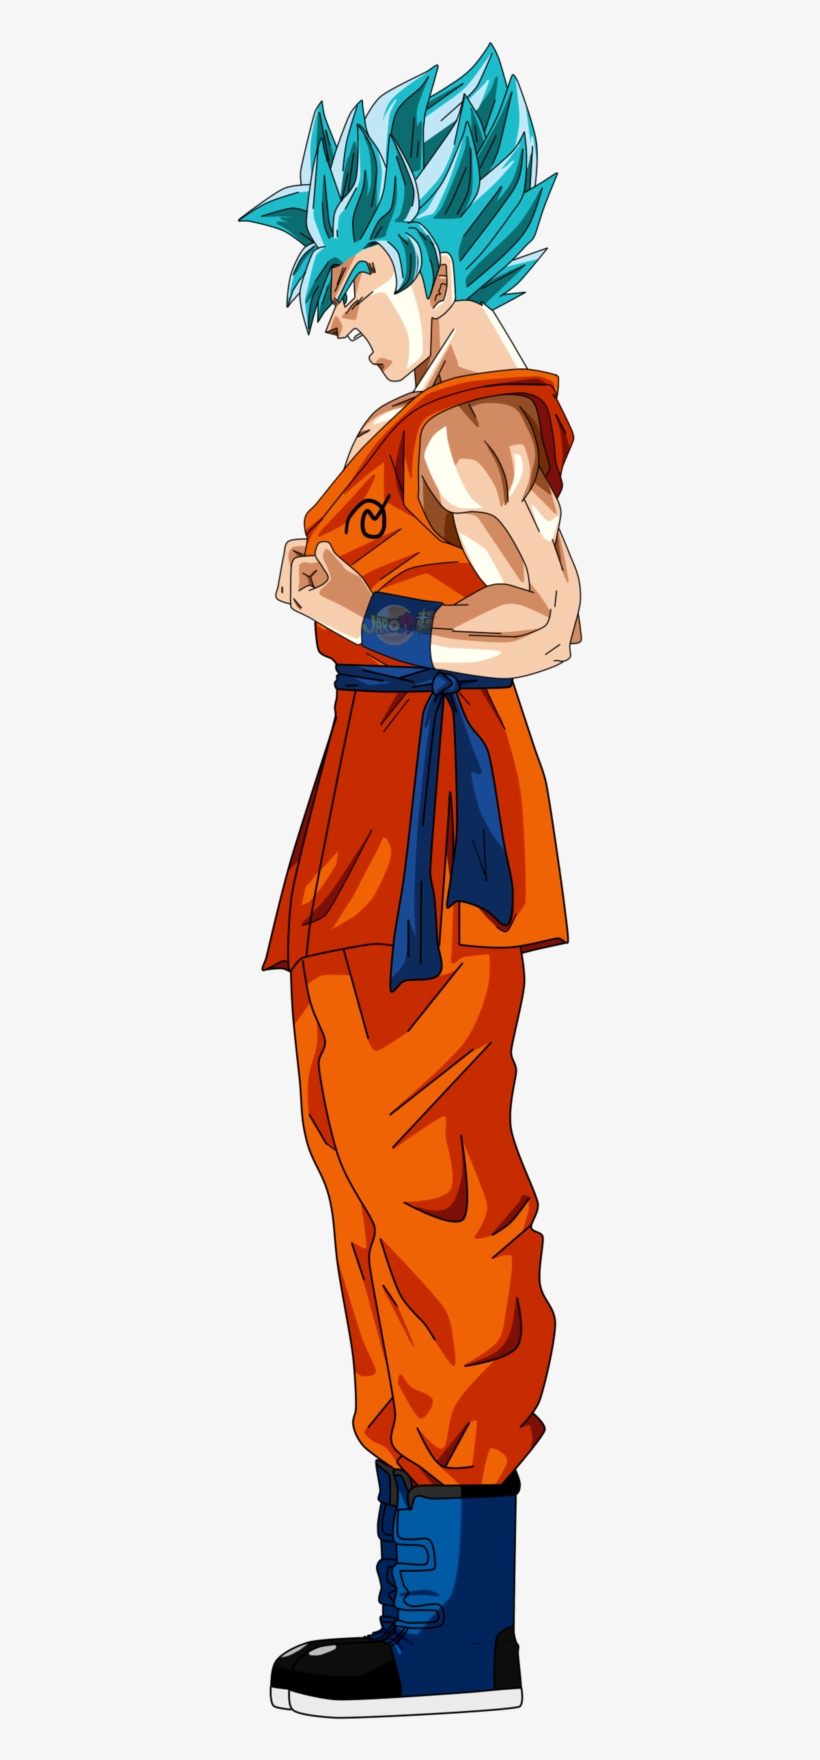 fanart] Goku super saiyan blue kaioken drawing : r/dbz